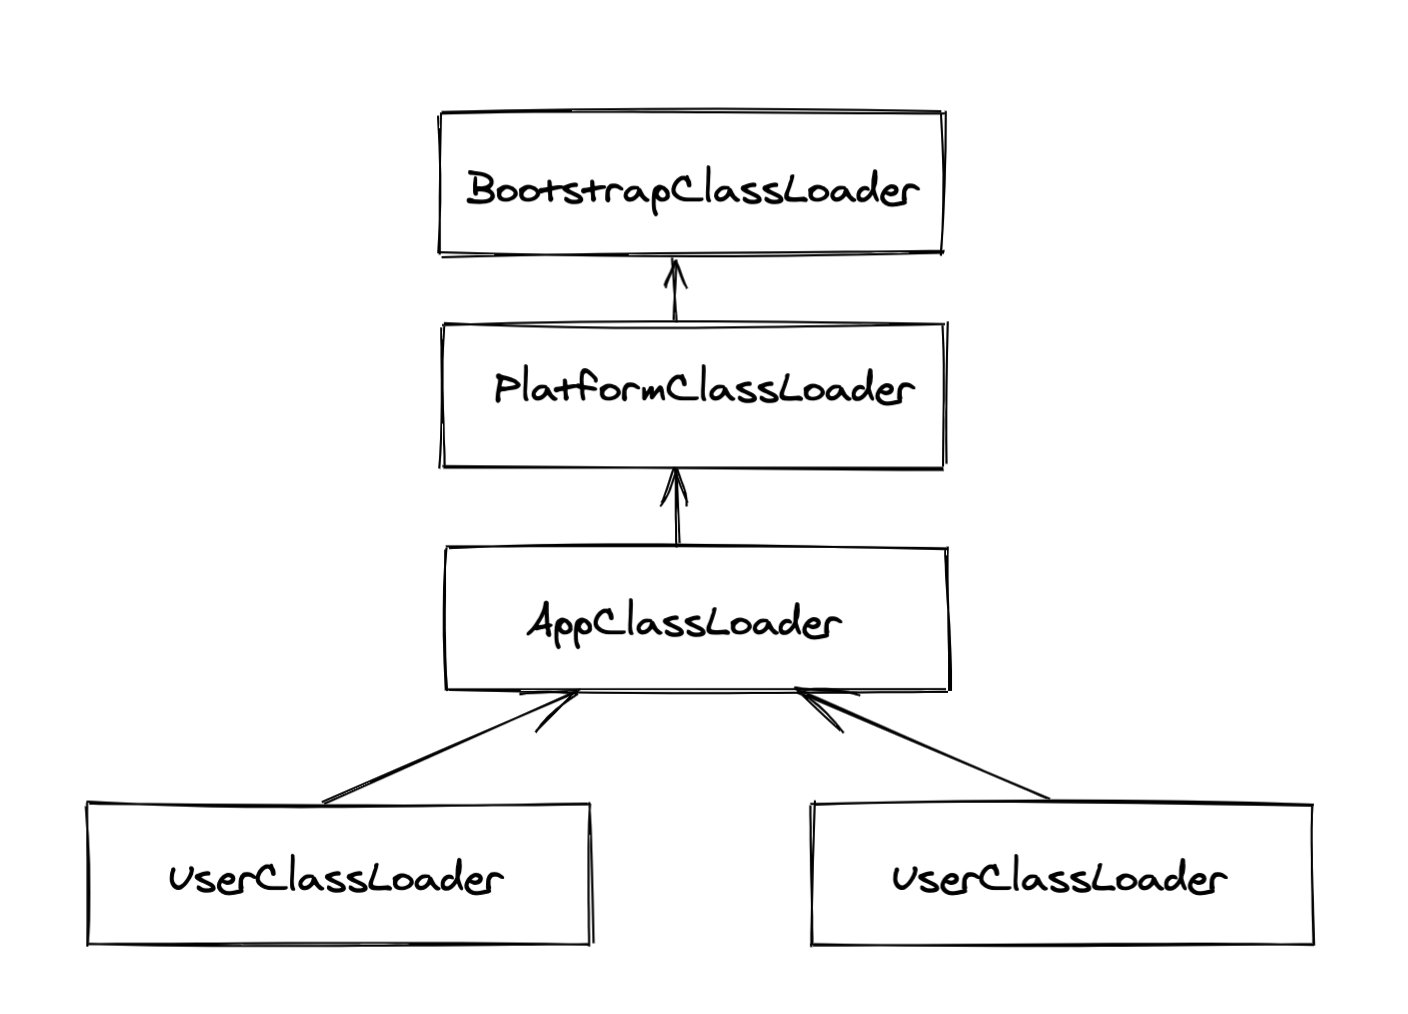 6、Java对象系统基础 - 图2